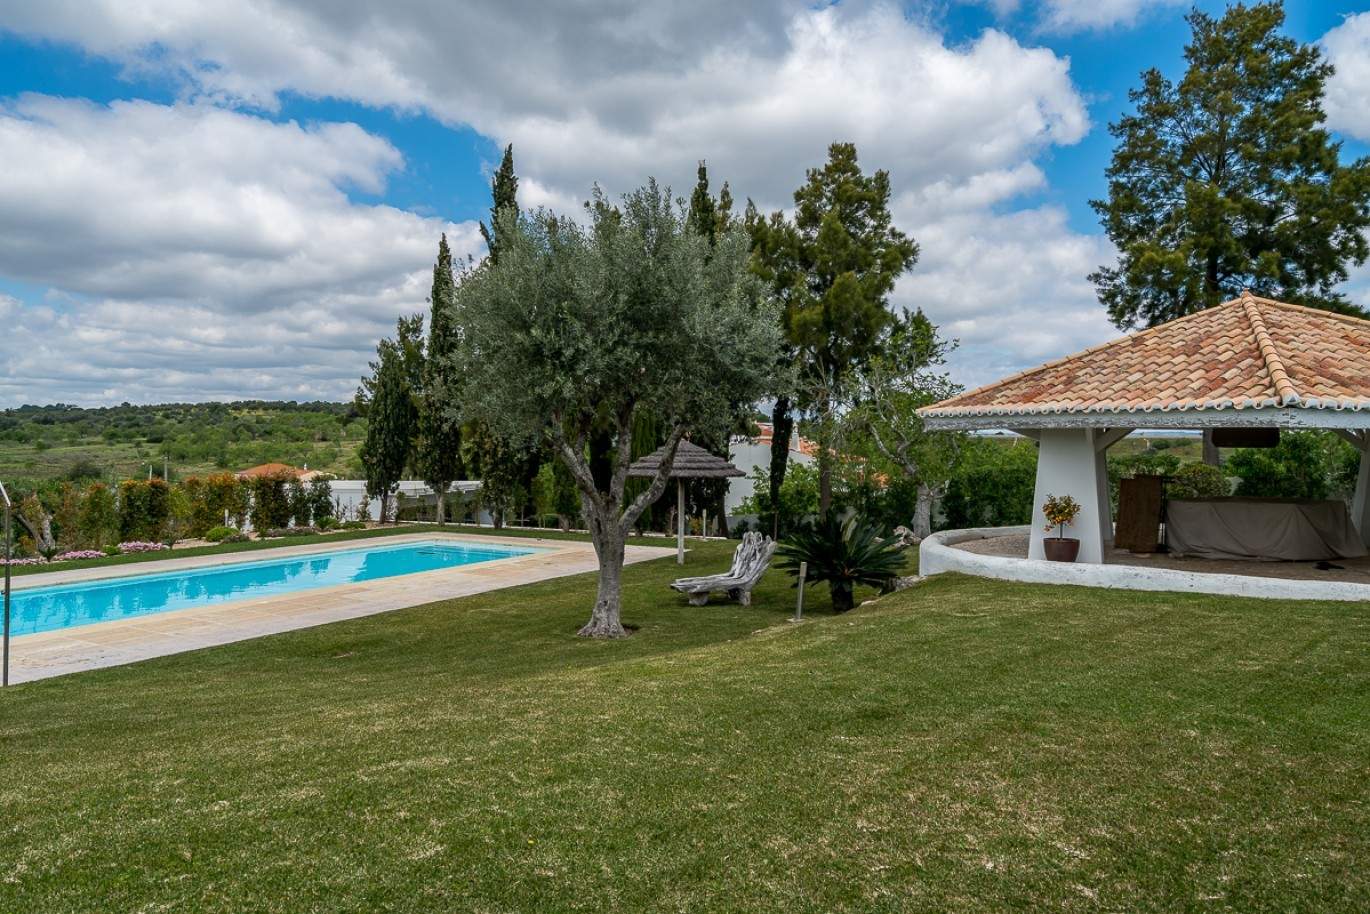 Venda de moradia de luxo com piscina, Silves, Algarve_77337